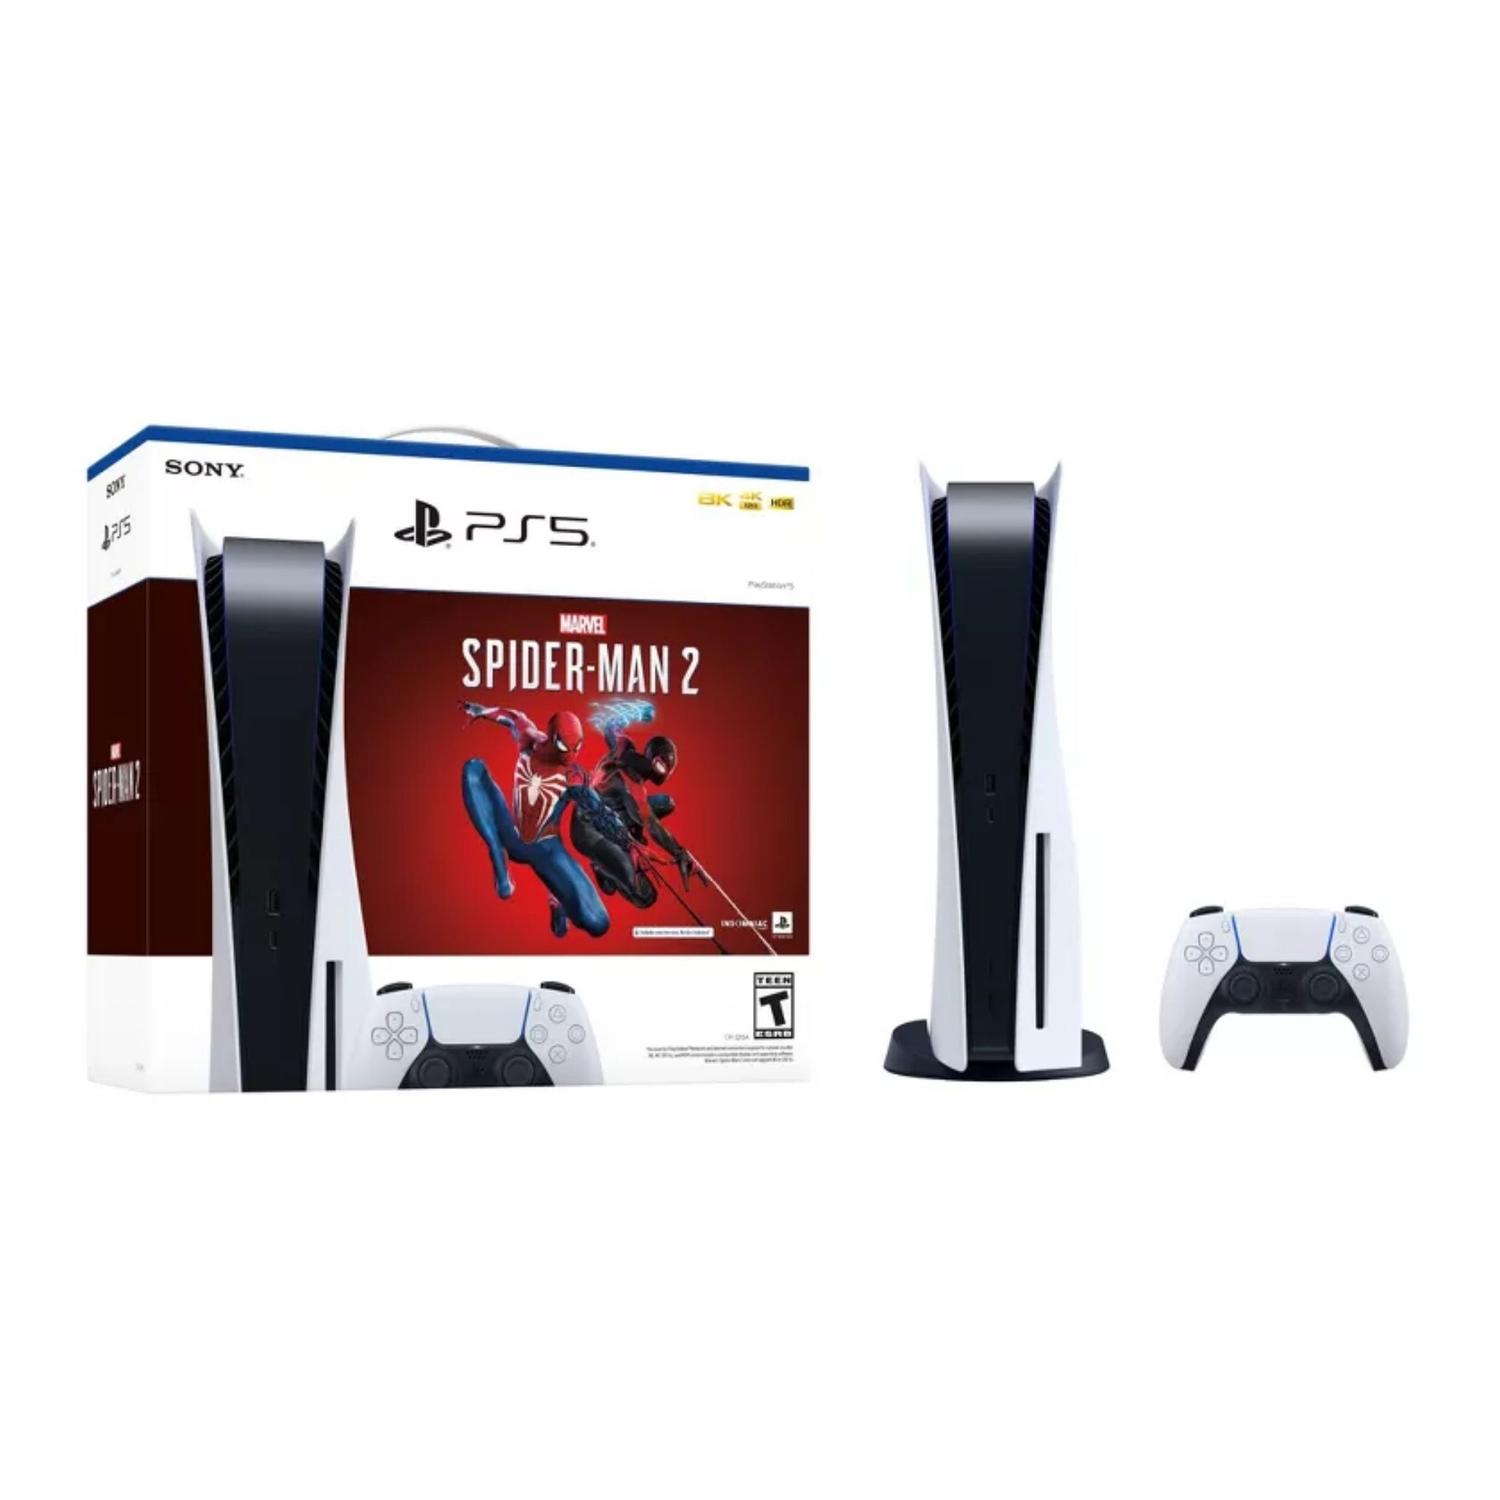 Play Station 5 Slim PS5 con Juego Virtual Spider-Man 2 - 1 TB